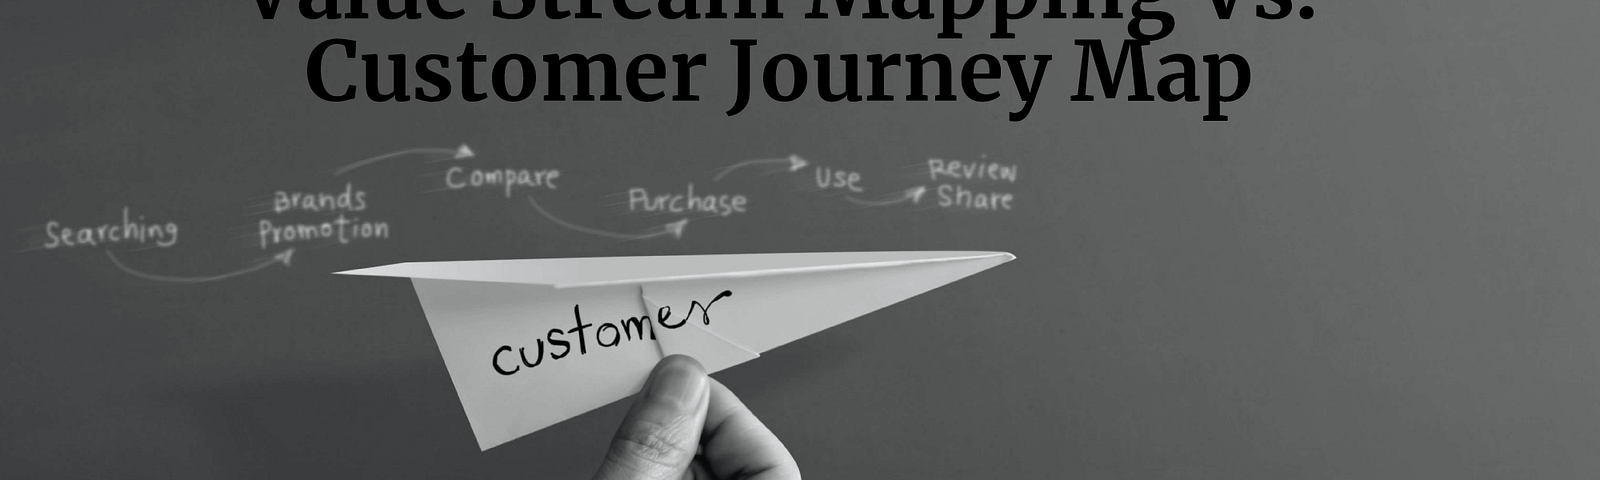 Value Stream Mapping vs. Customer Journey Map